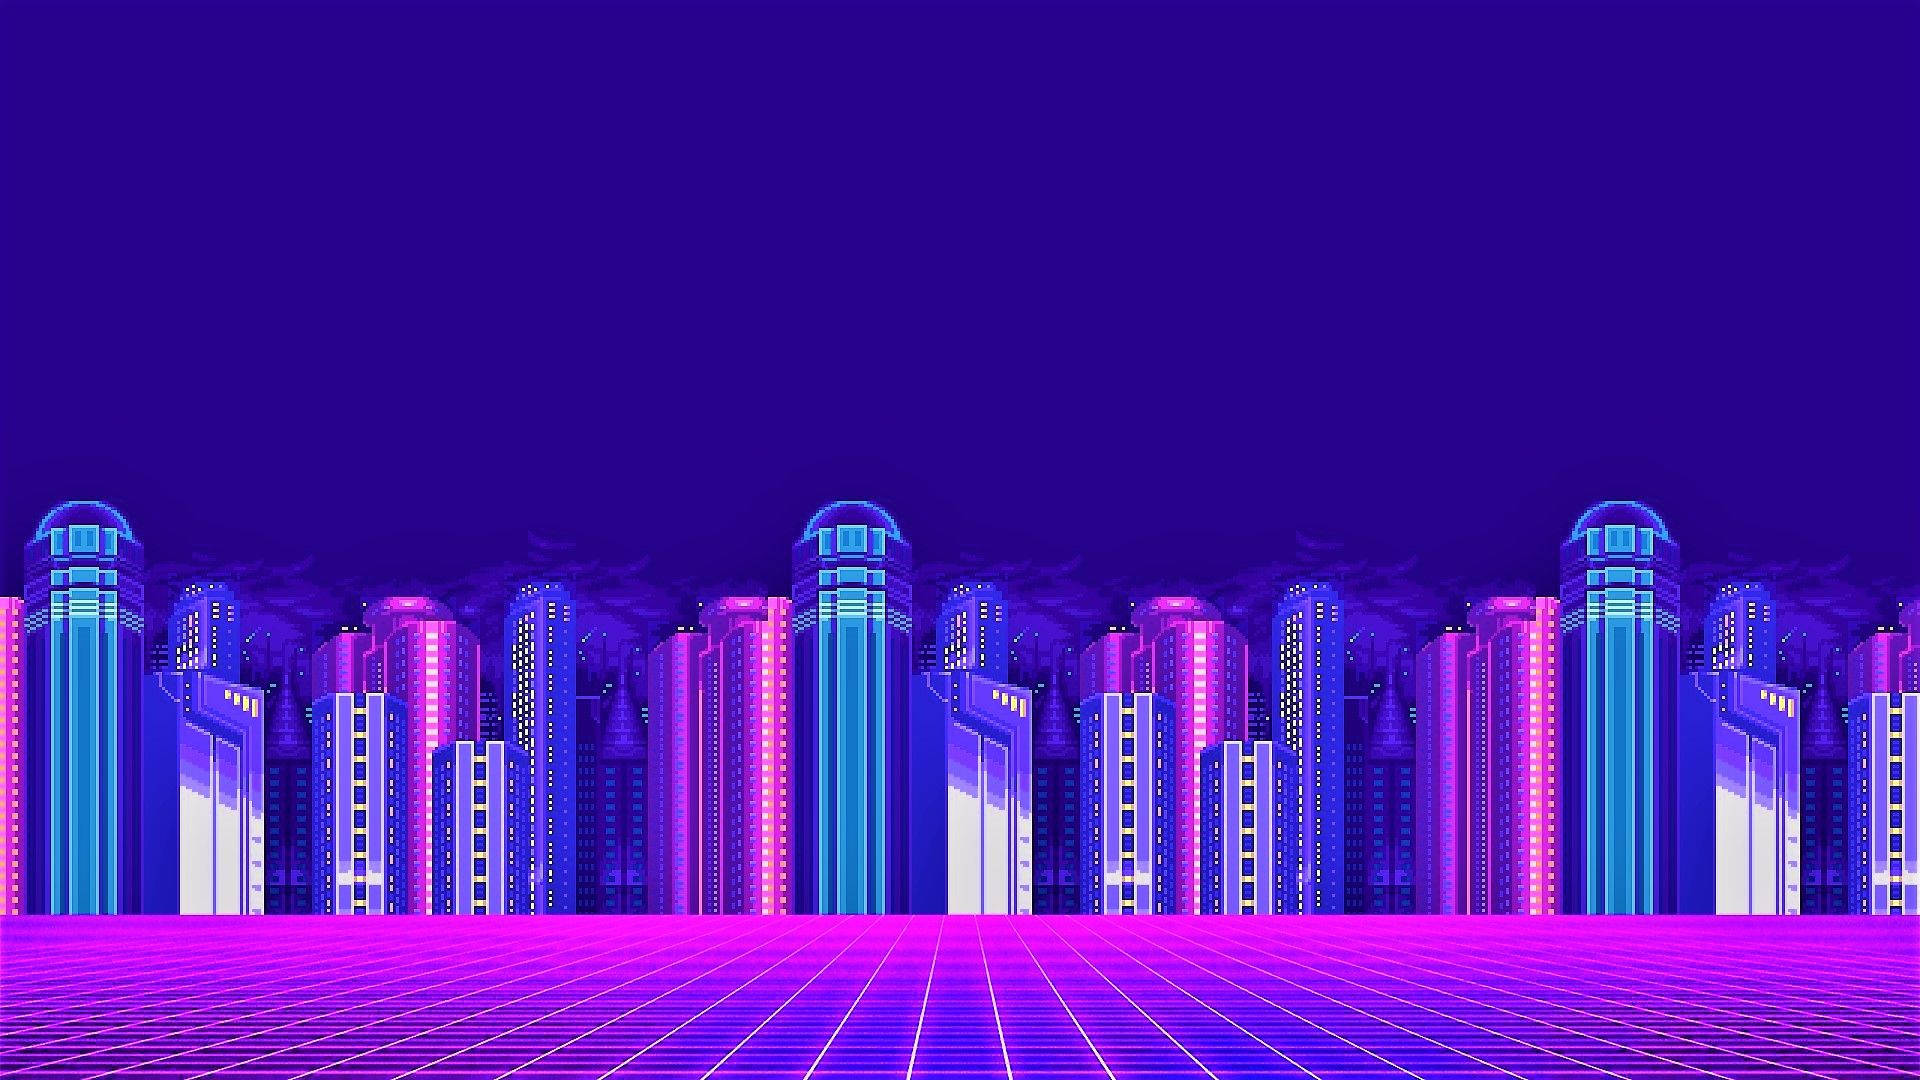 Iconic Vaporwave Neon City Background